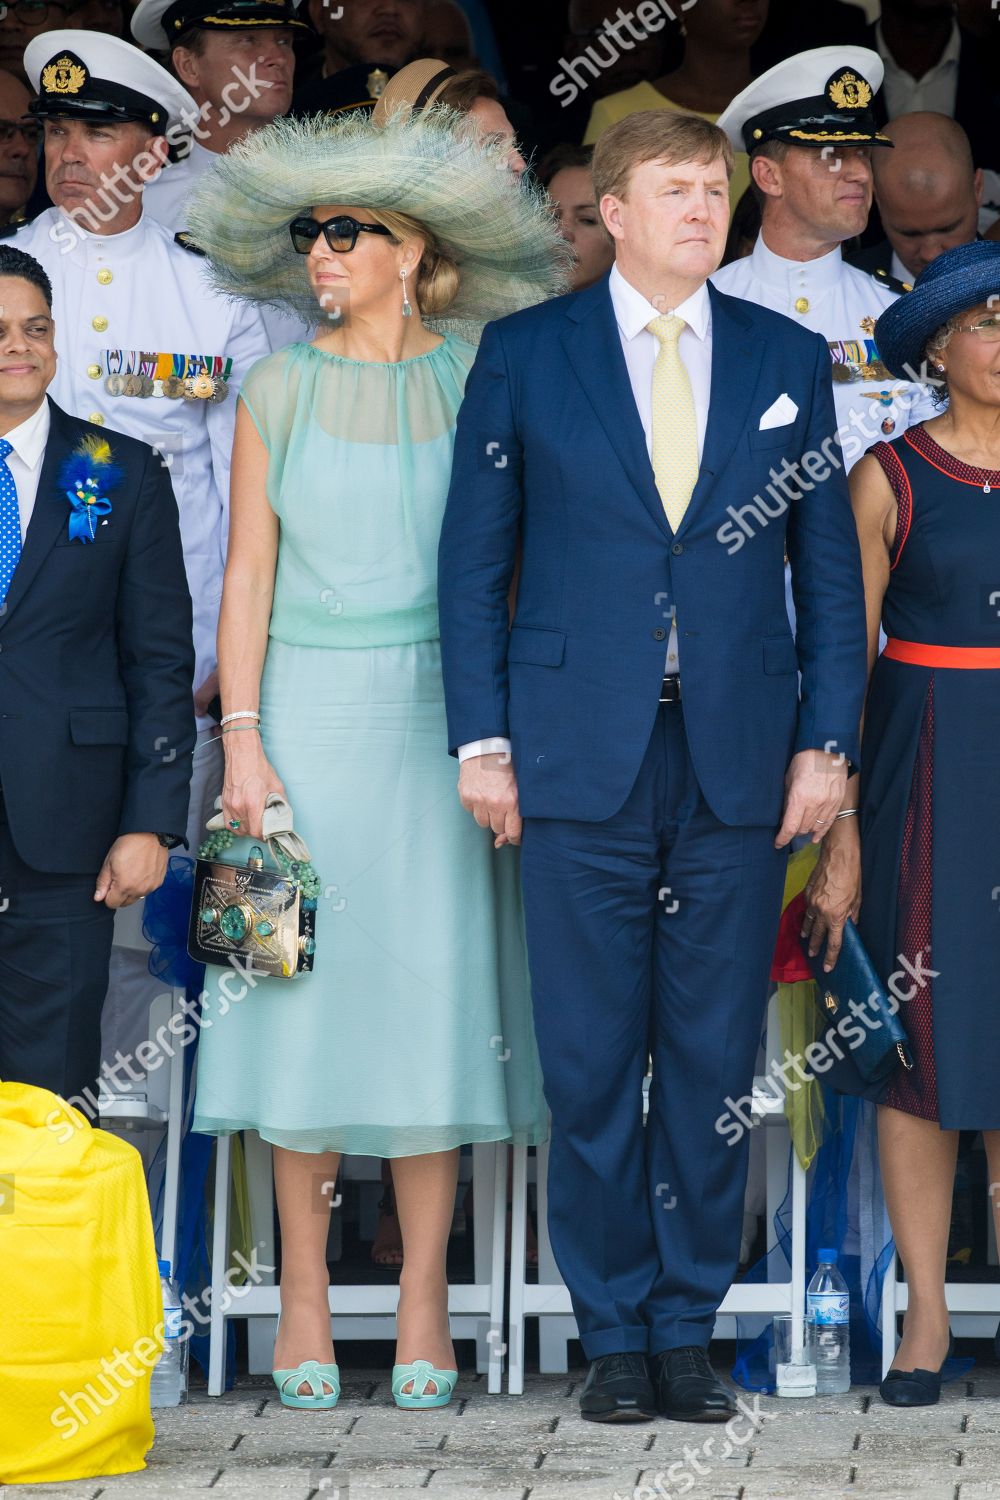 dutch-royals-visit-to-the-caribbean-shutterstock-editorial-9732763am.jpg